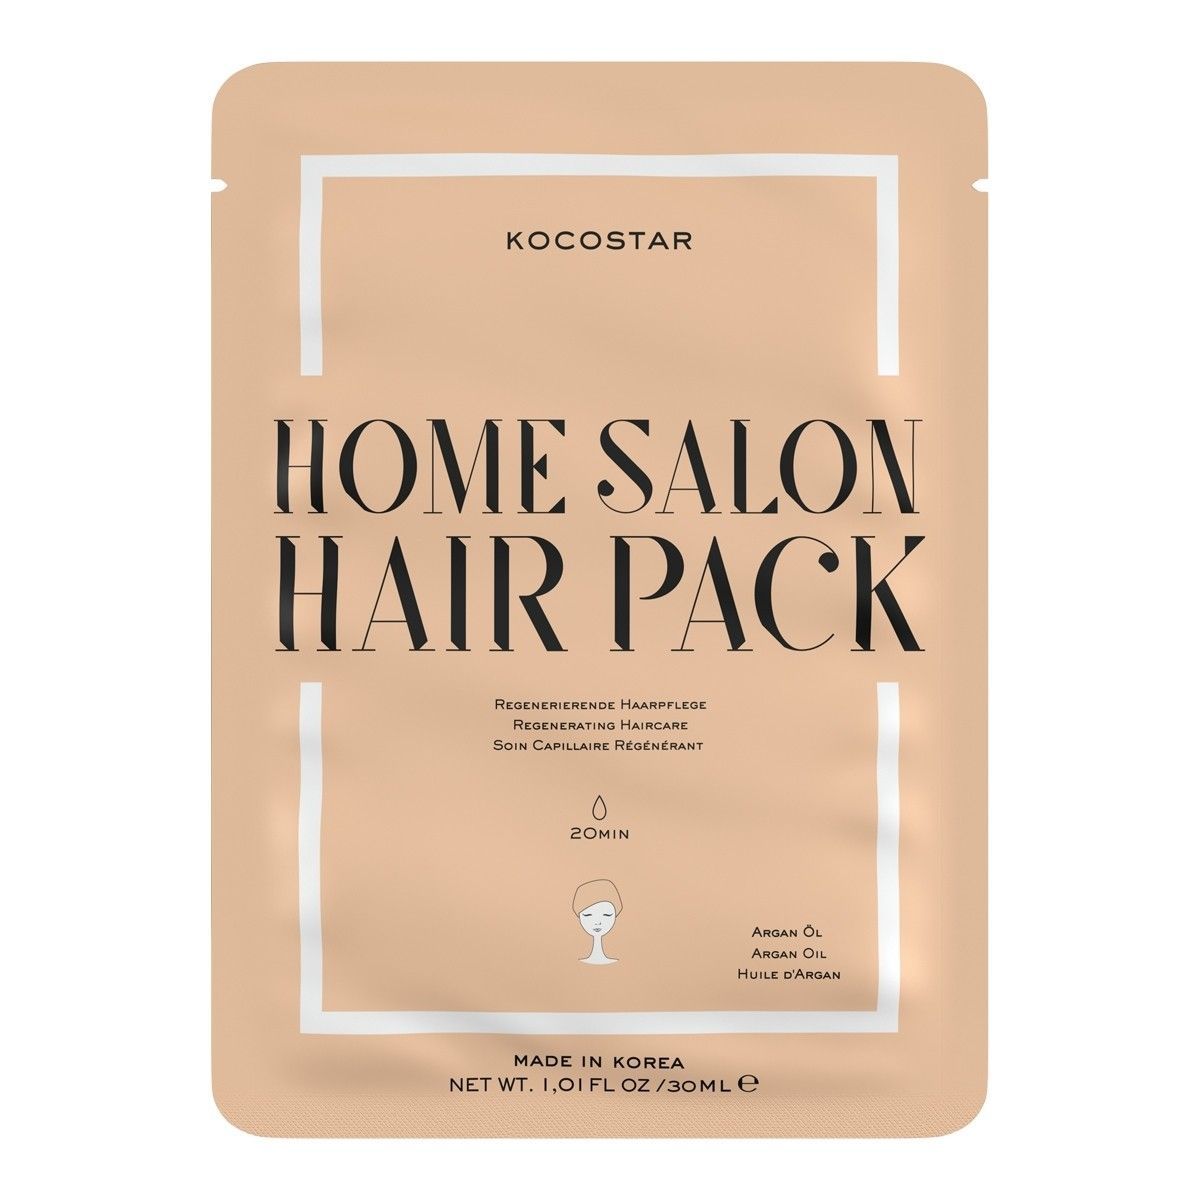 Kocostar Home Salon Hair Pack 